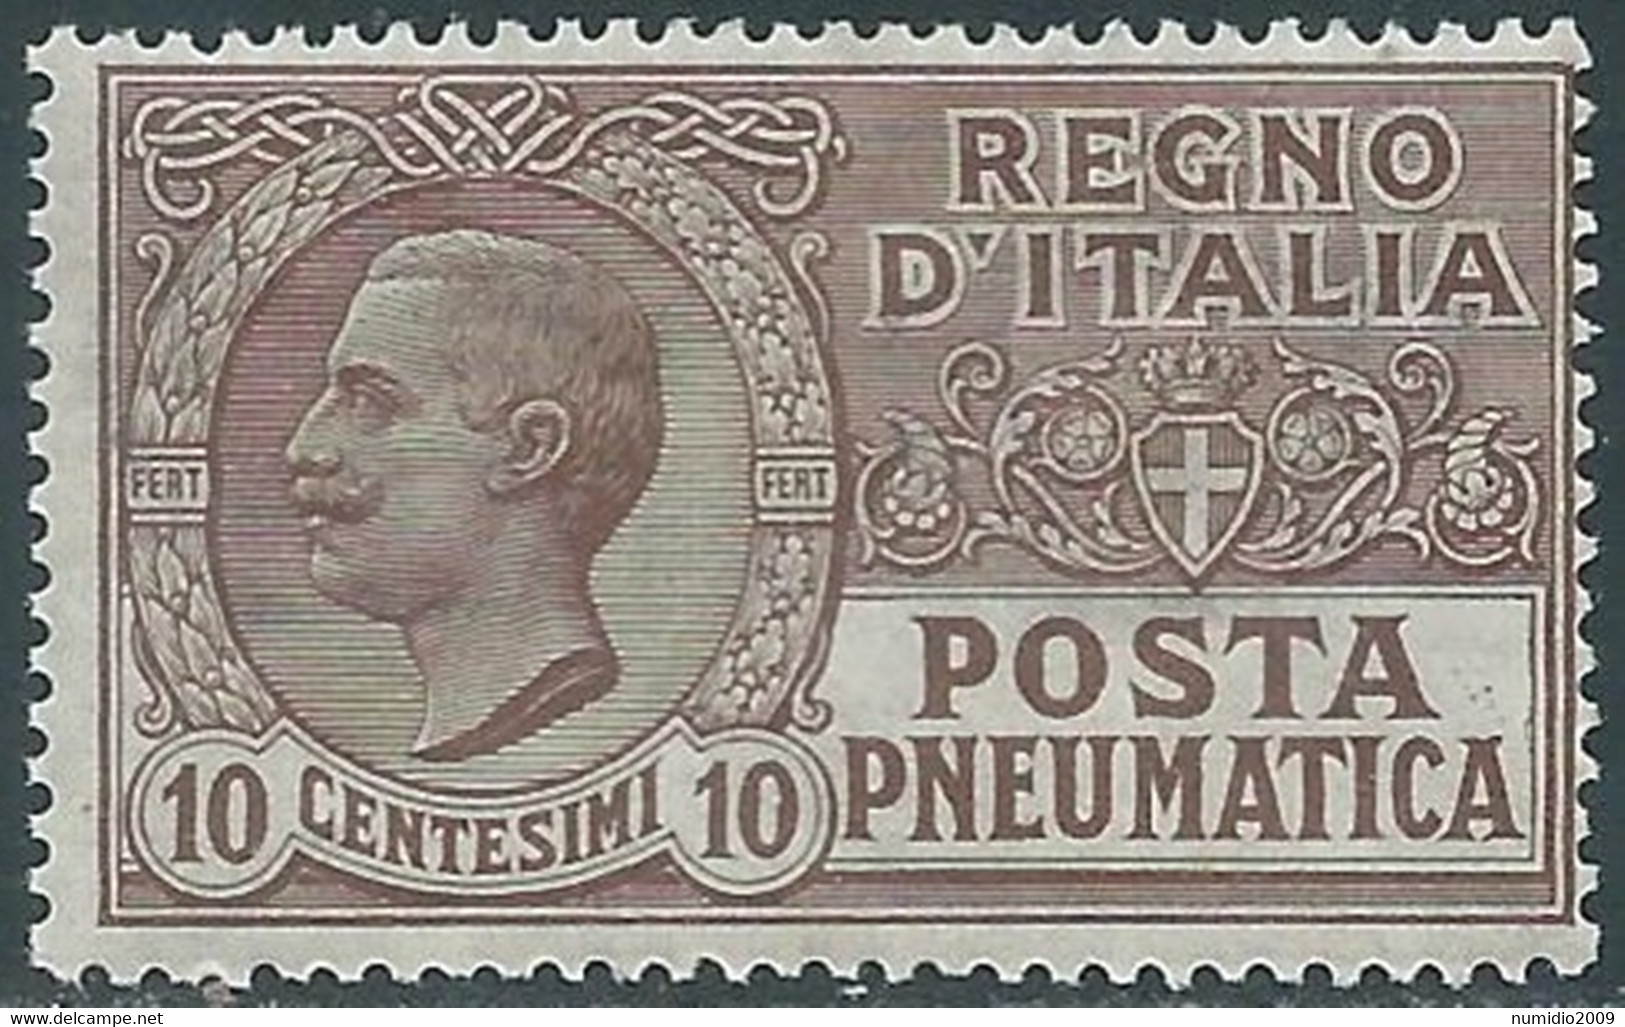 1913-23 REGNO POSTA PNEUMATICA 10 CENT MNH ** - RF39-2 - Poste Pneumatique